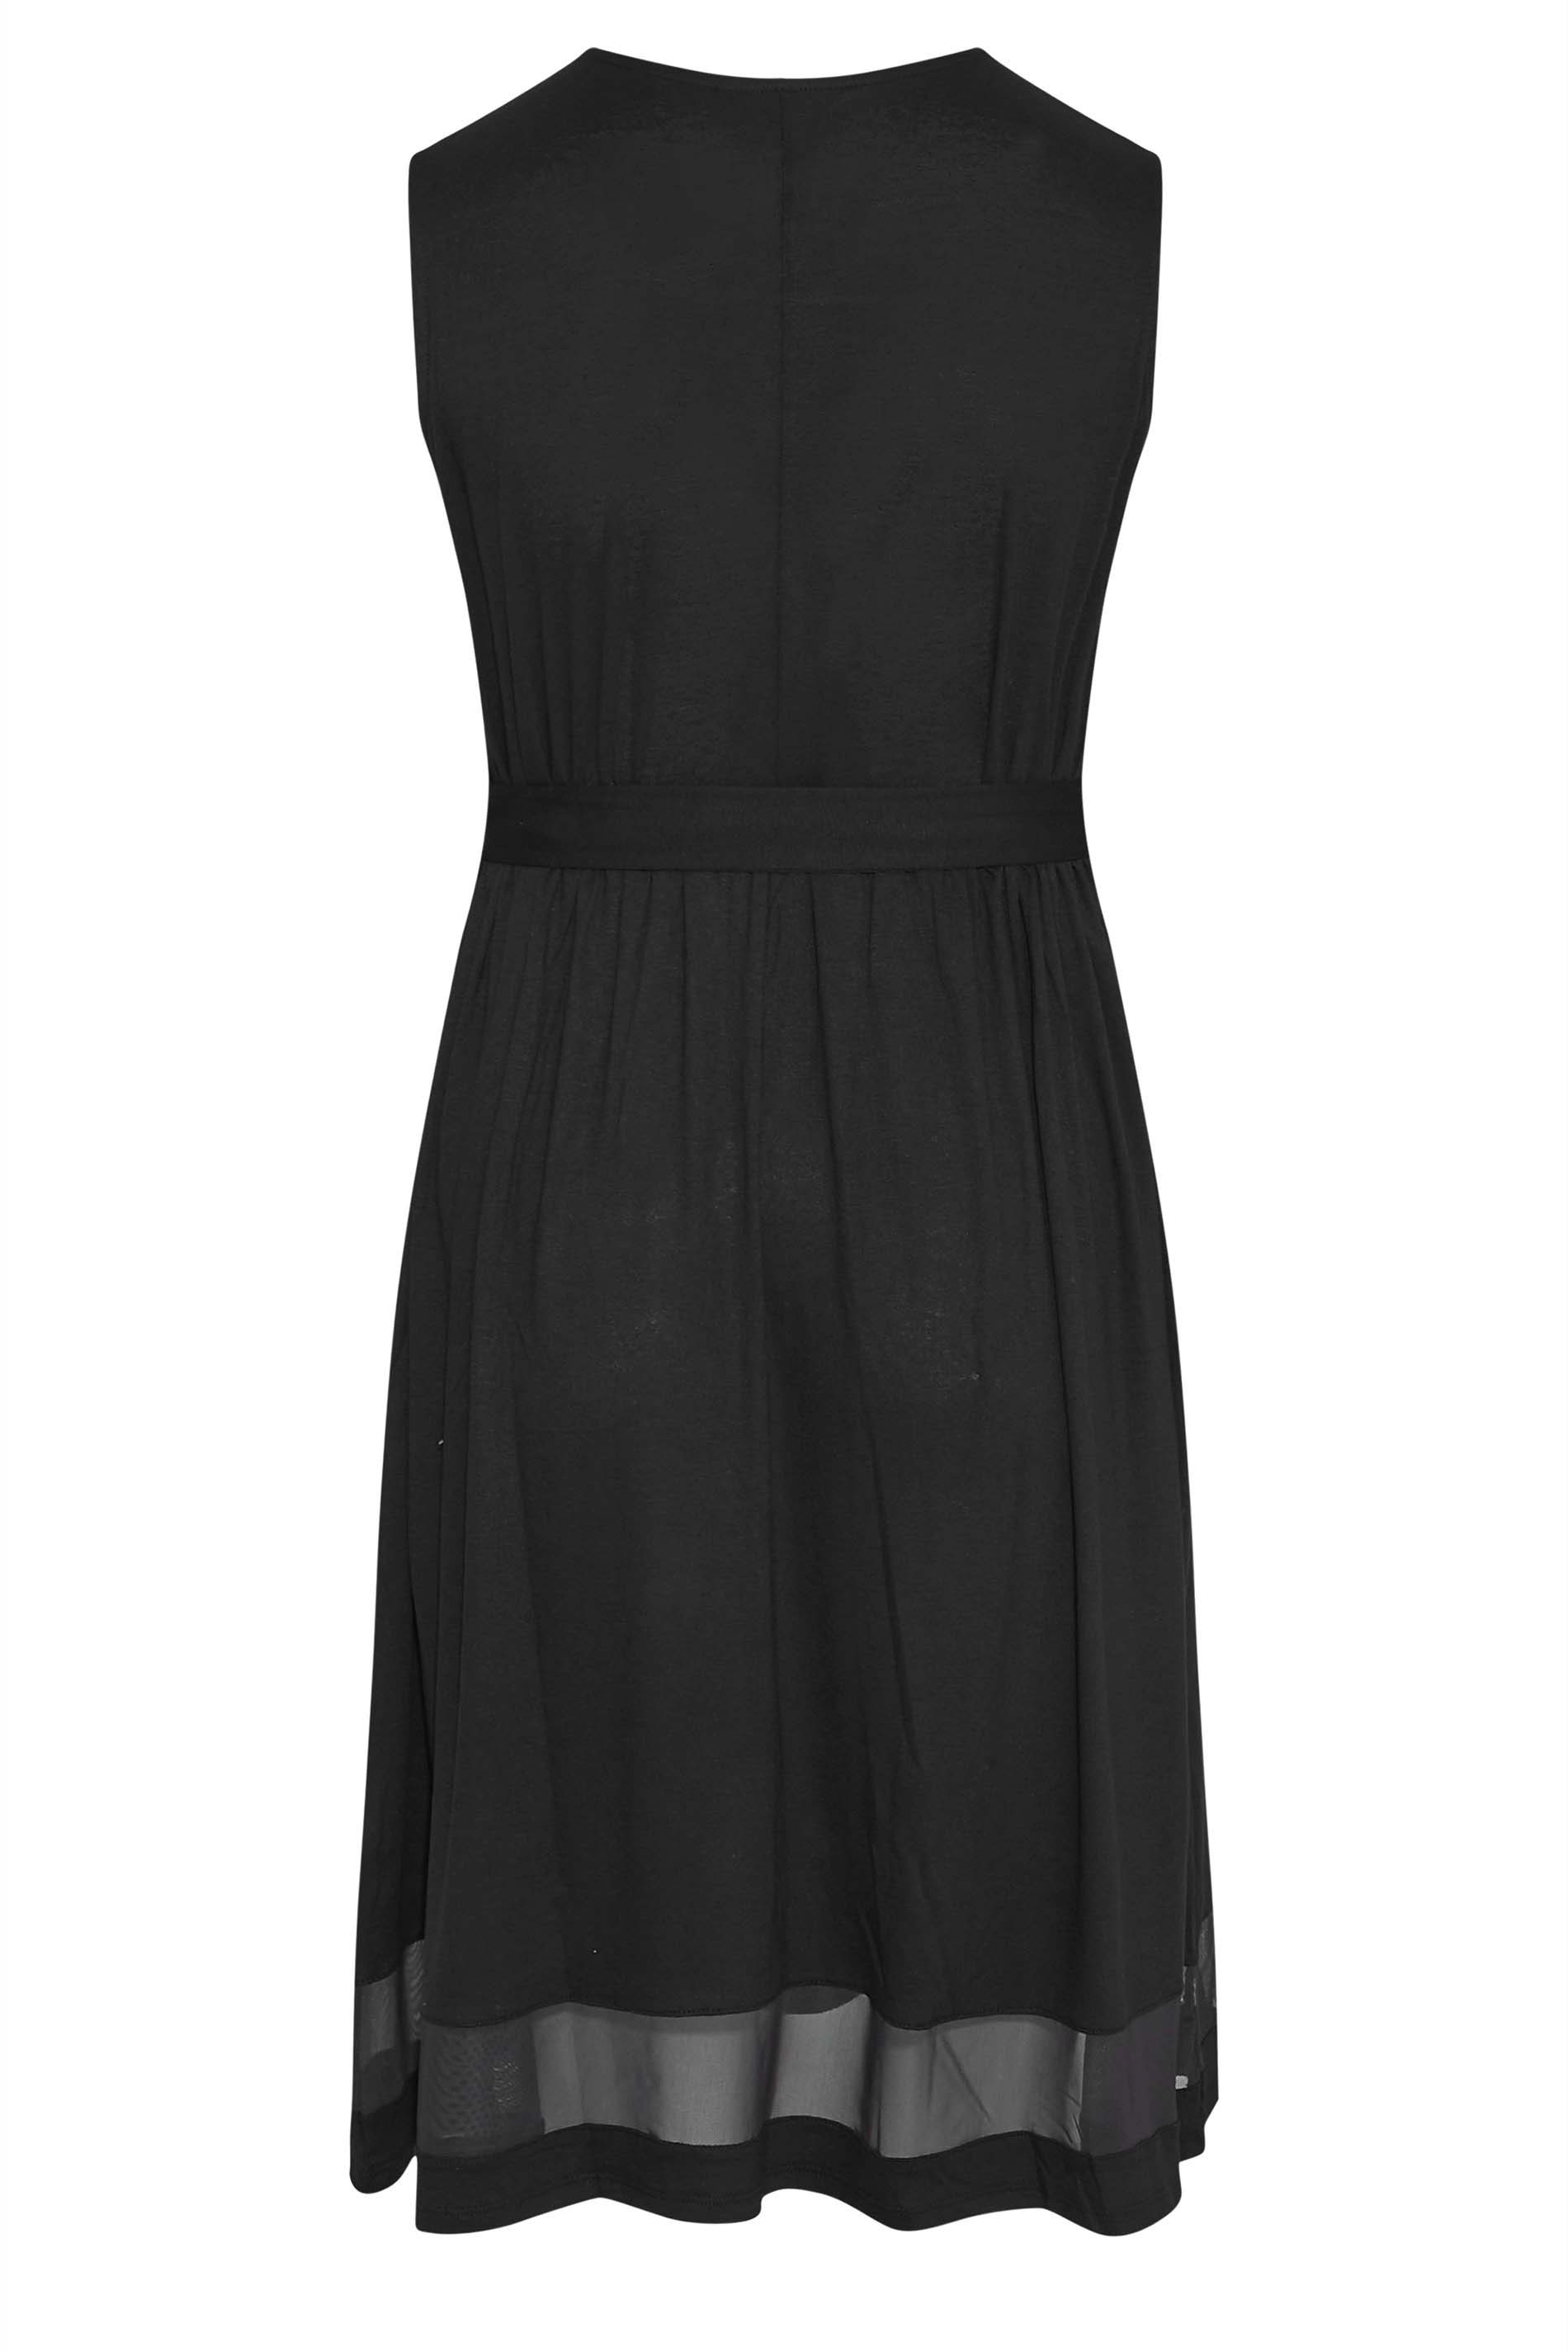 Robes Grande Taille Grande taille  Robes Mi-Longue | Curve Black Mesh Panel Skater Dress - DY68087